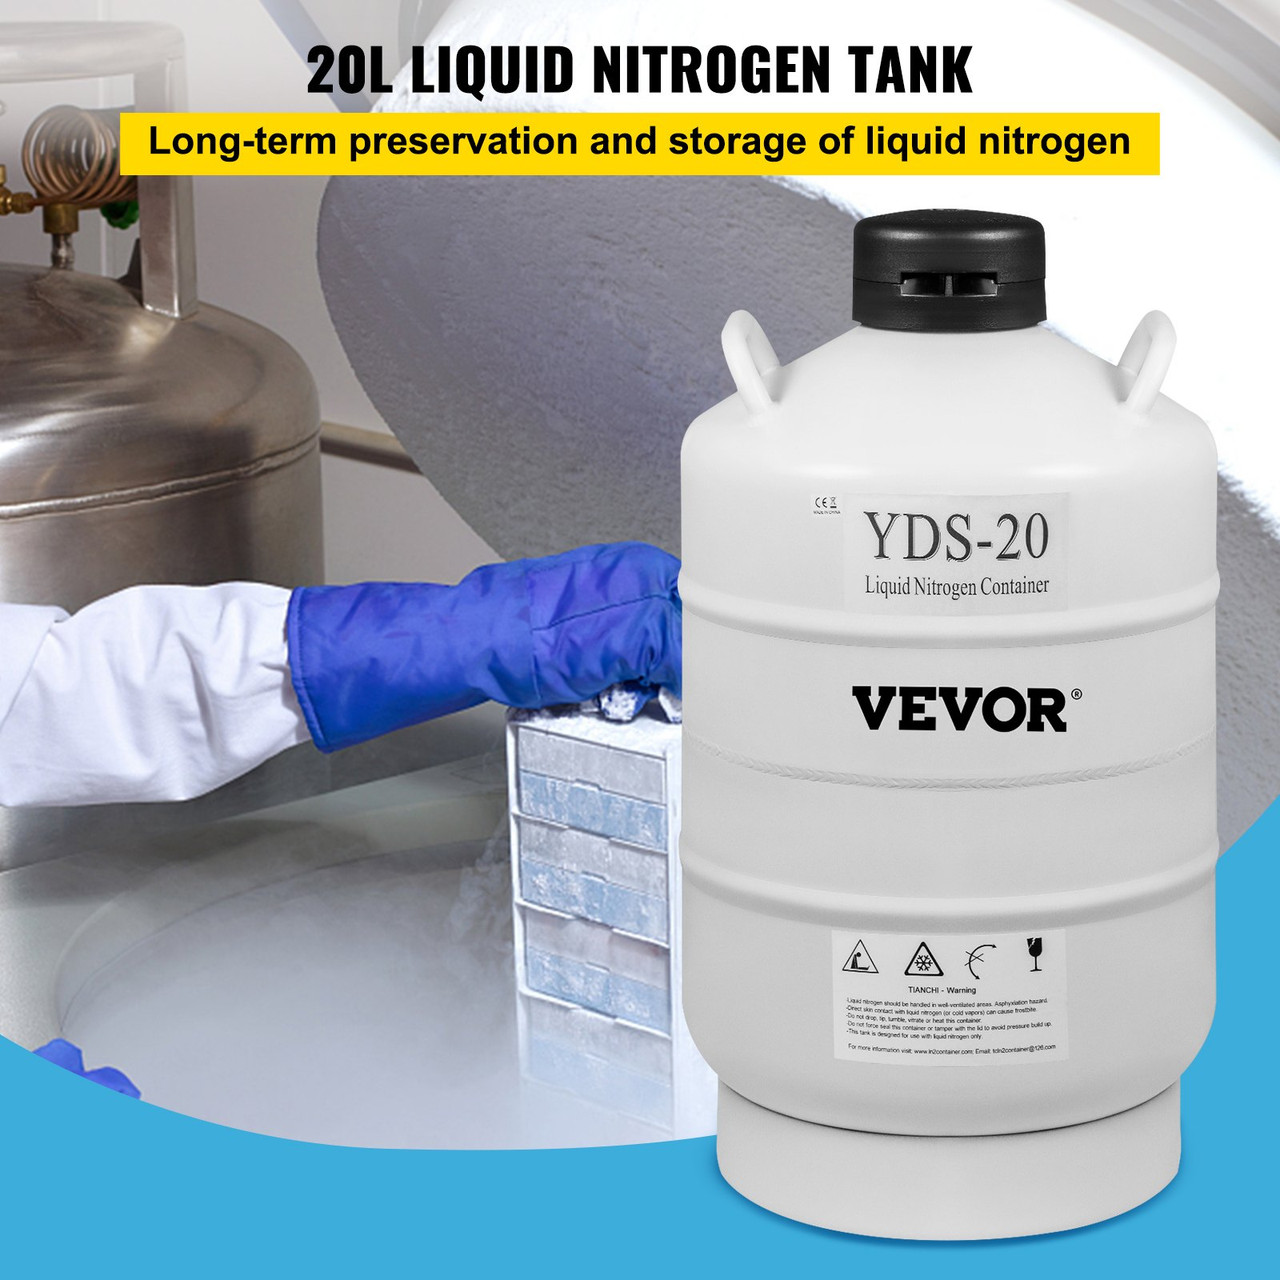 20L Liquid Nitrogen Tank Aluminum Alloy Liquid Nitrogen Dewar Static Cryogenic Container Liquid Nitrogen Container with 6 Canisters and Carry Bag